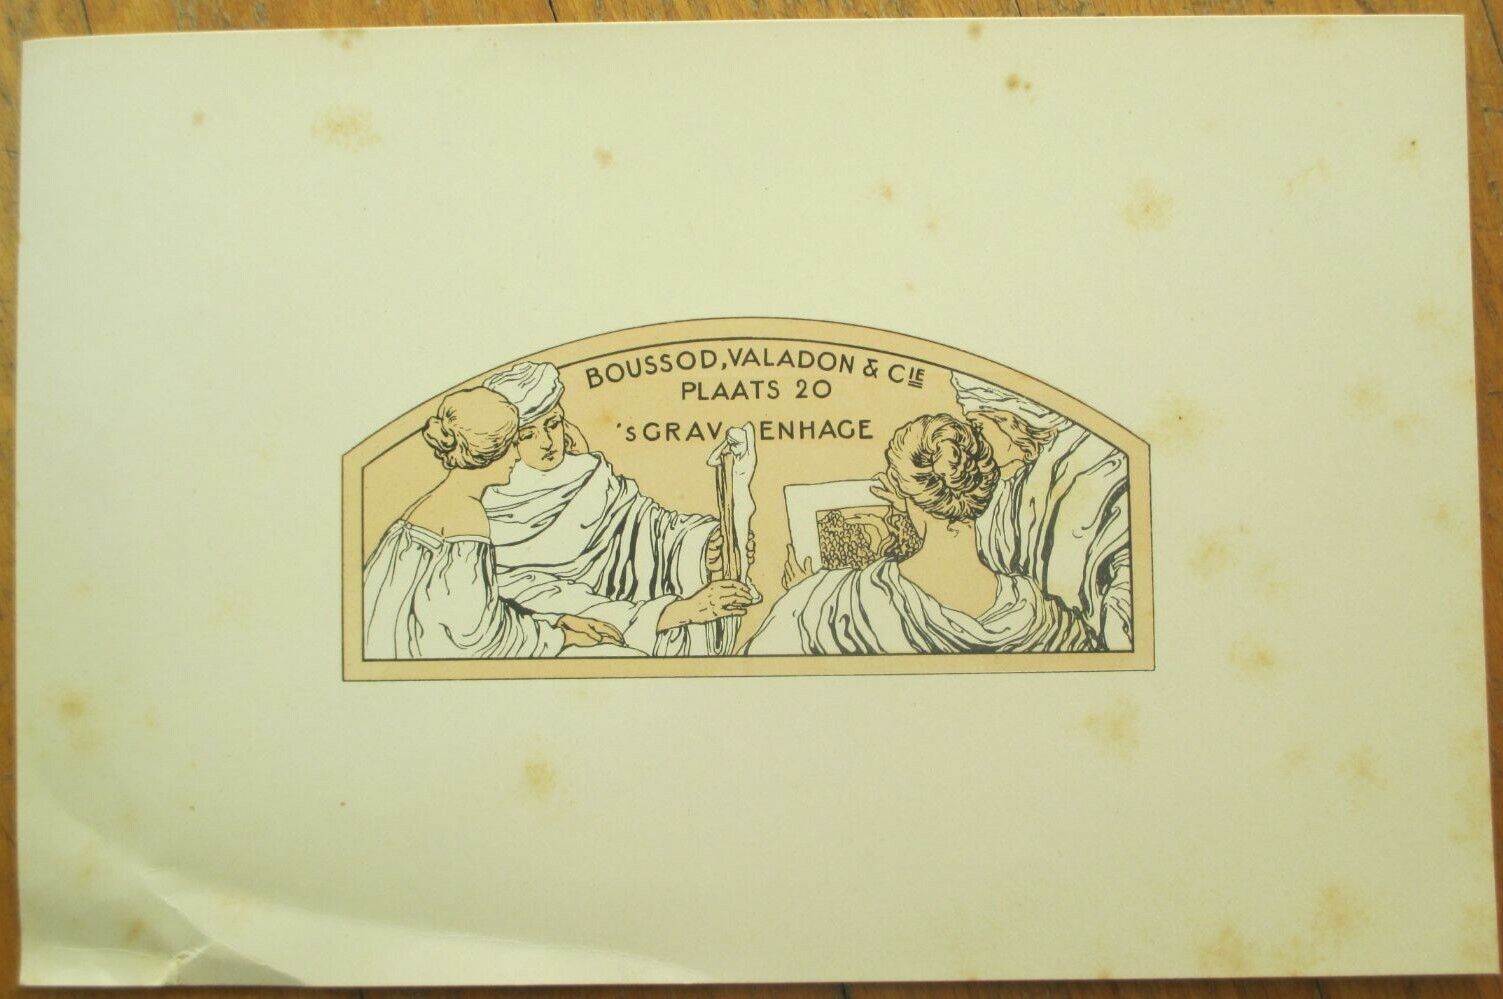 Boussod, Valadon & Cie., Gravenhage 1890 Ad Card - Vincent Van Gogh Workplace